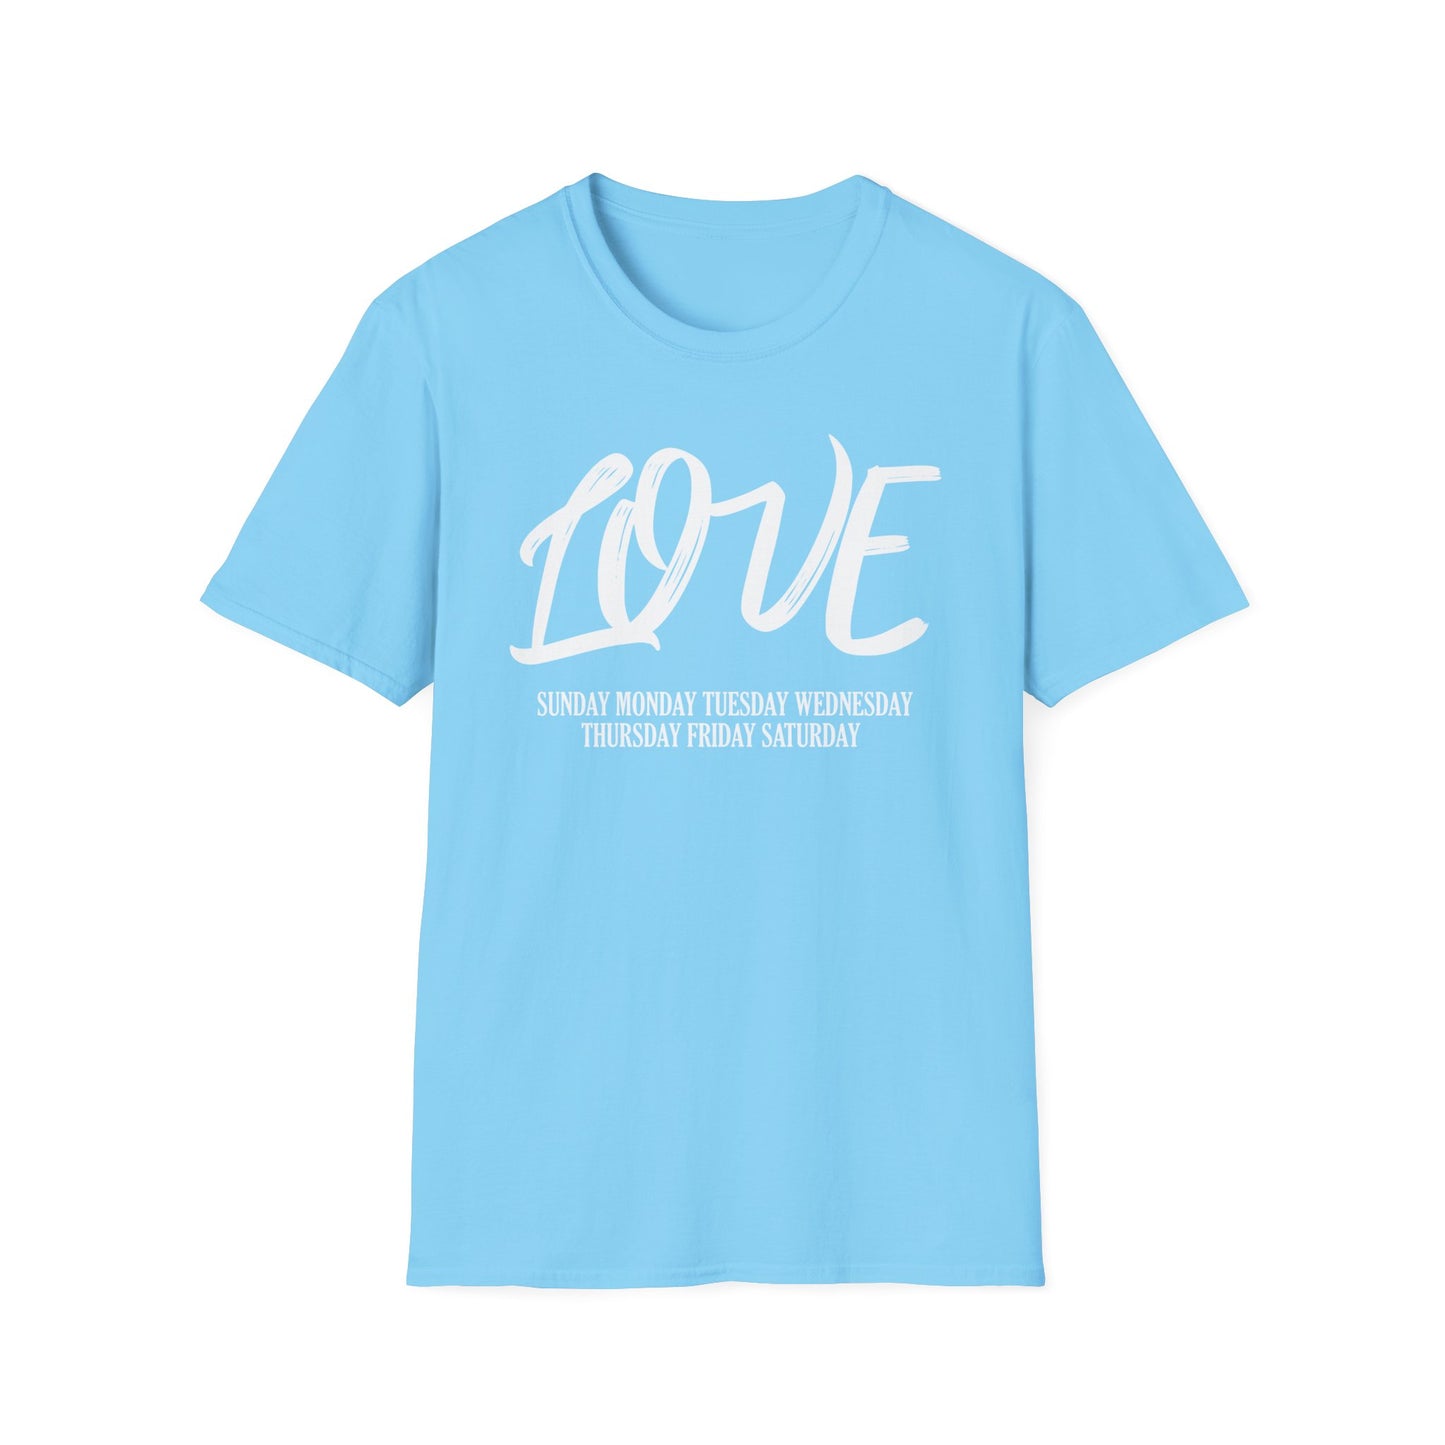 "Love Everyday" T-Shirt